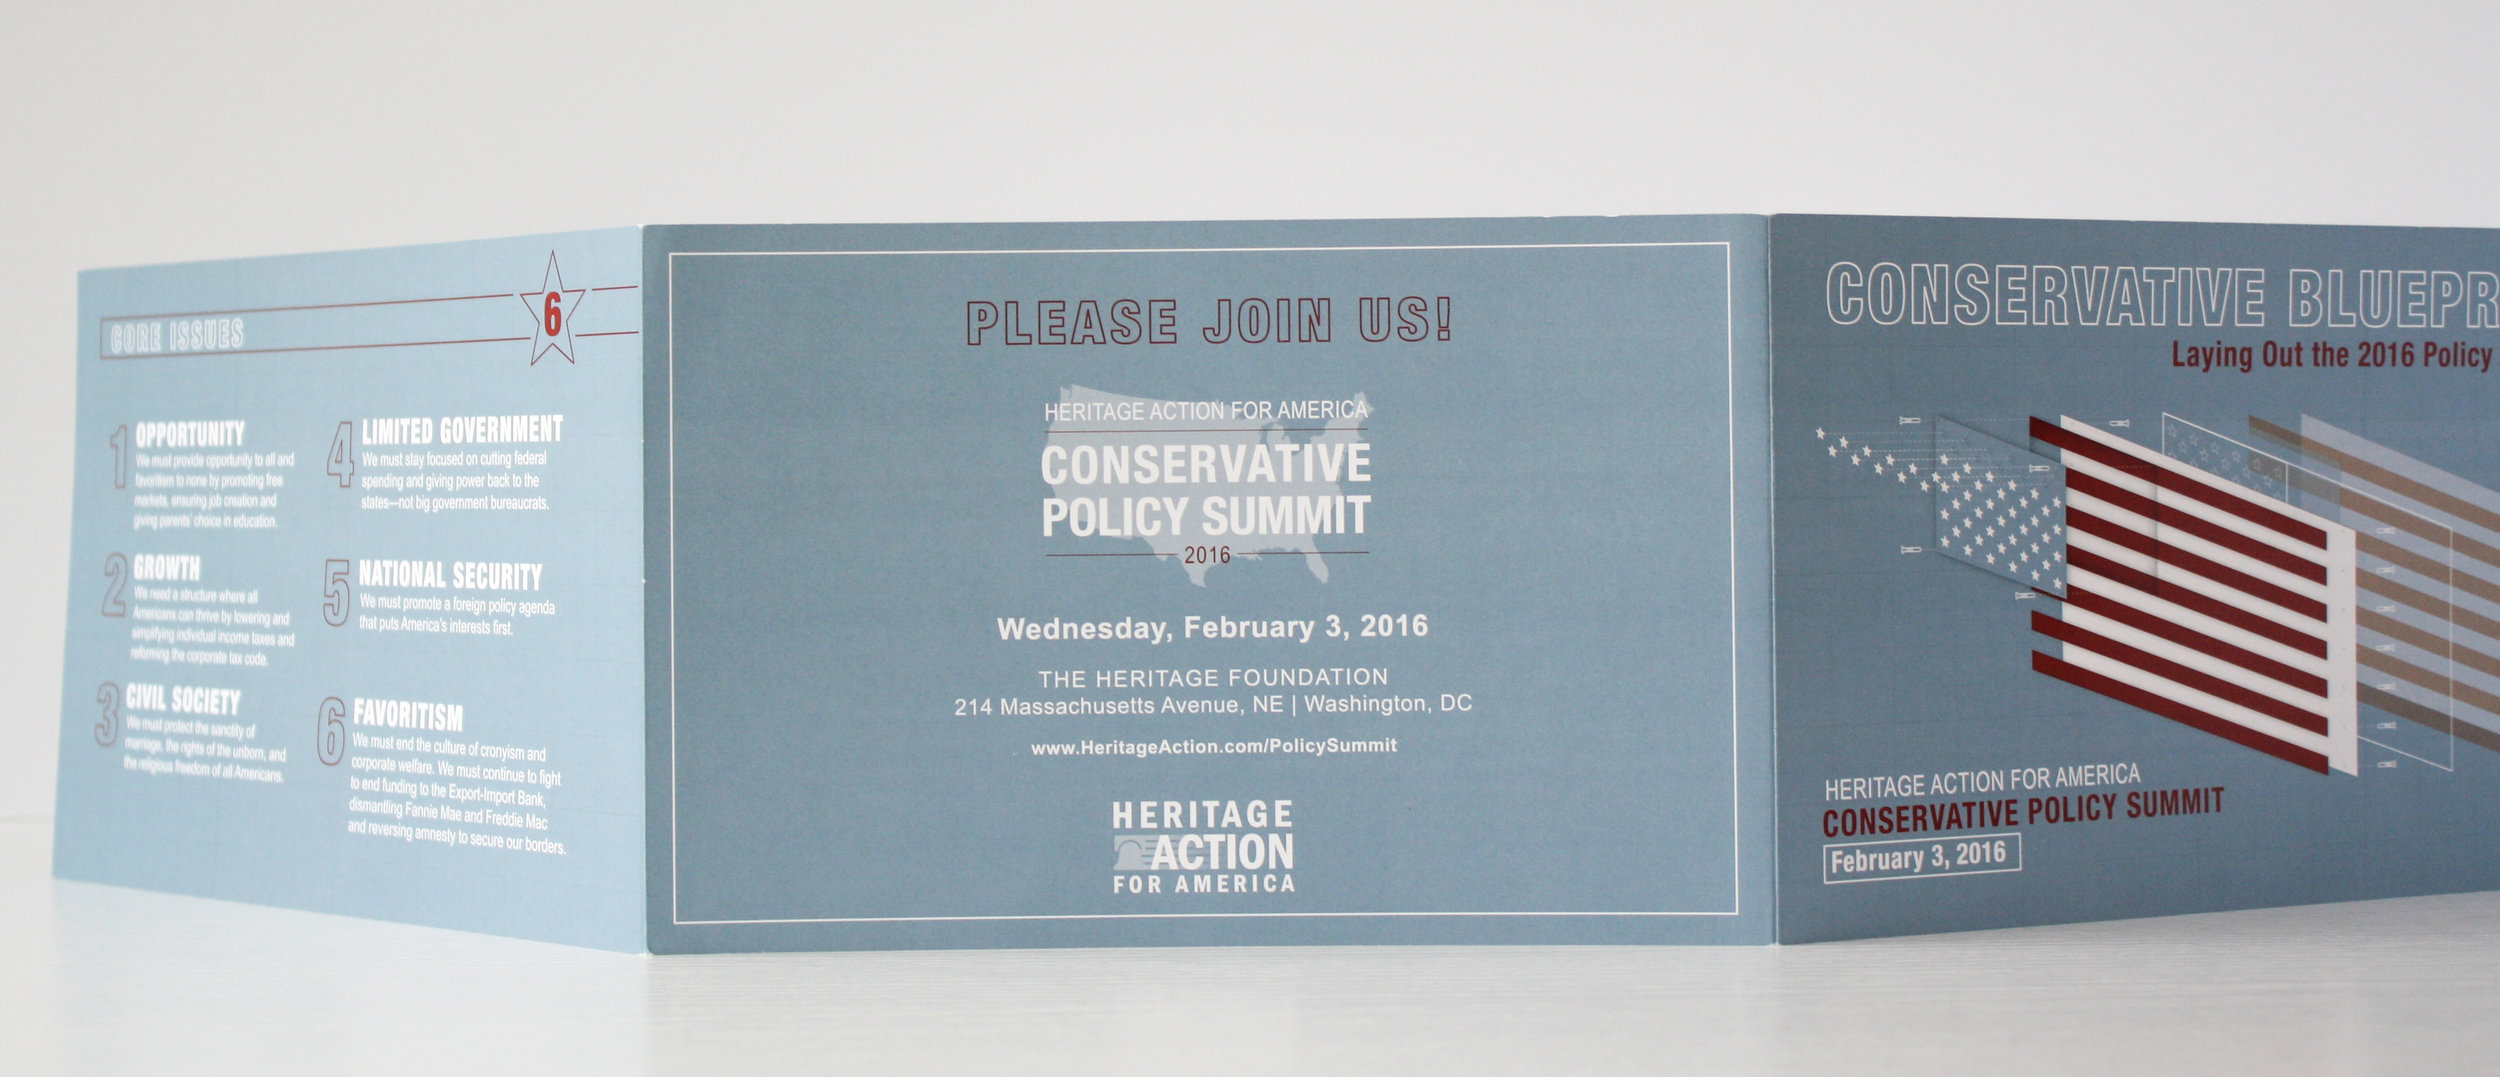 Conservative Policy Summit Corporate Event Invitation | Casi Long Design | casilong.com:portfolio | #casilongdesign #fearlesspursuit 6.jpg